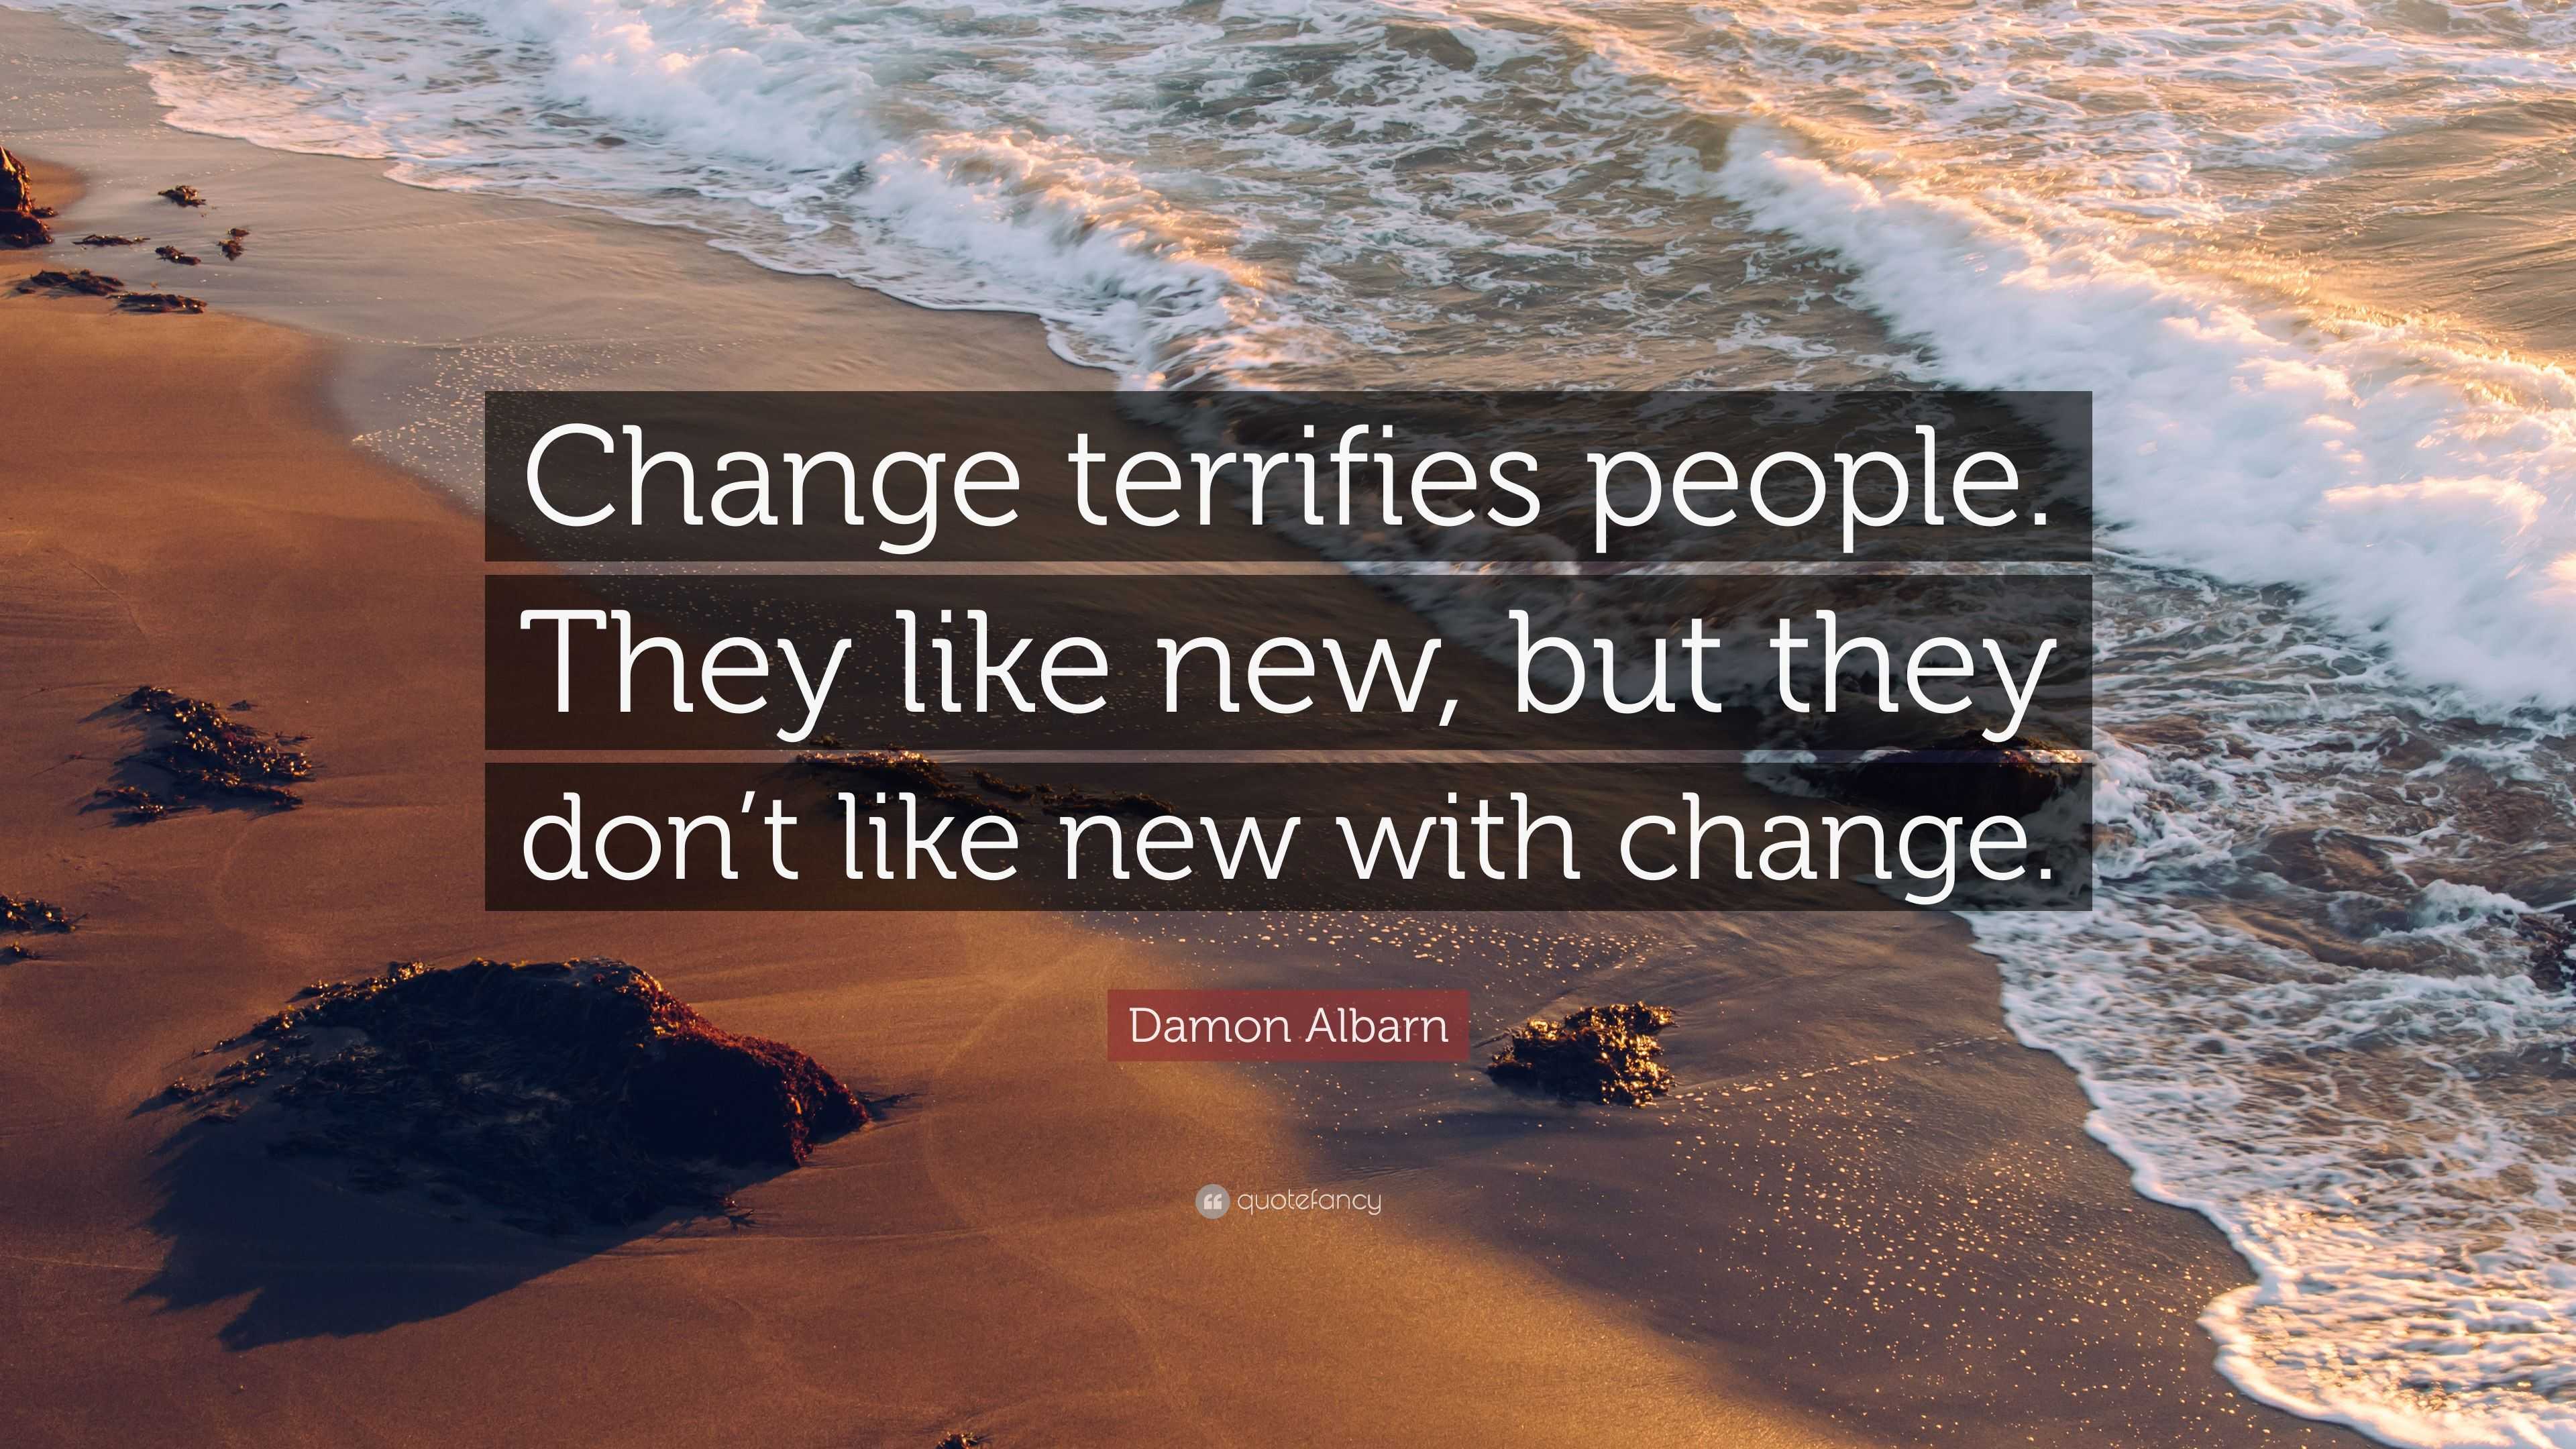 Damon Albarn Quote: “Change terrifies people. They like new, but they ...